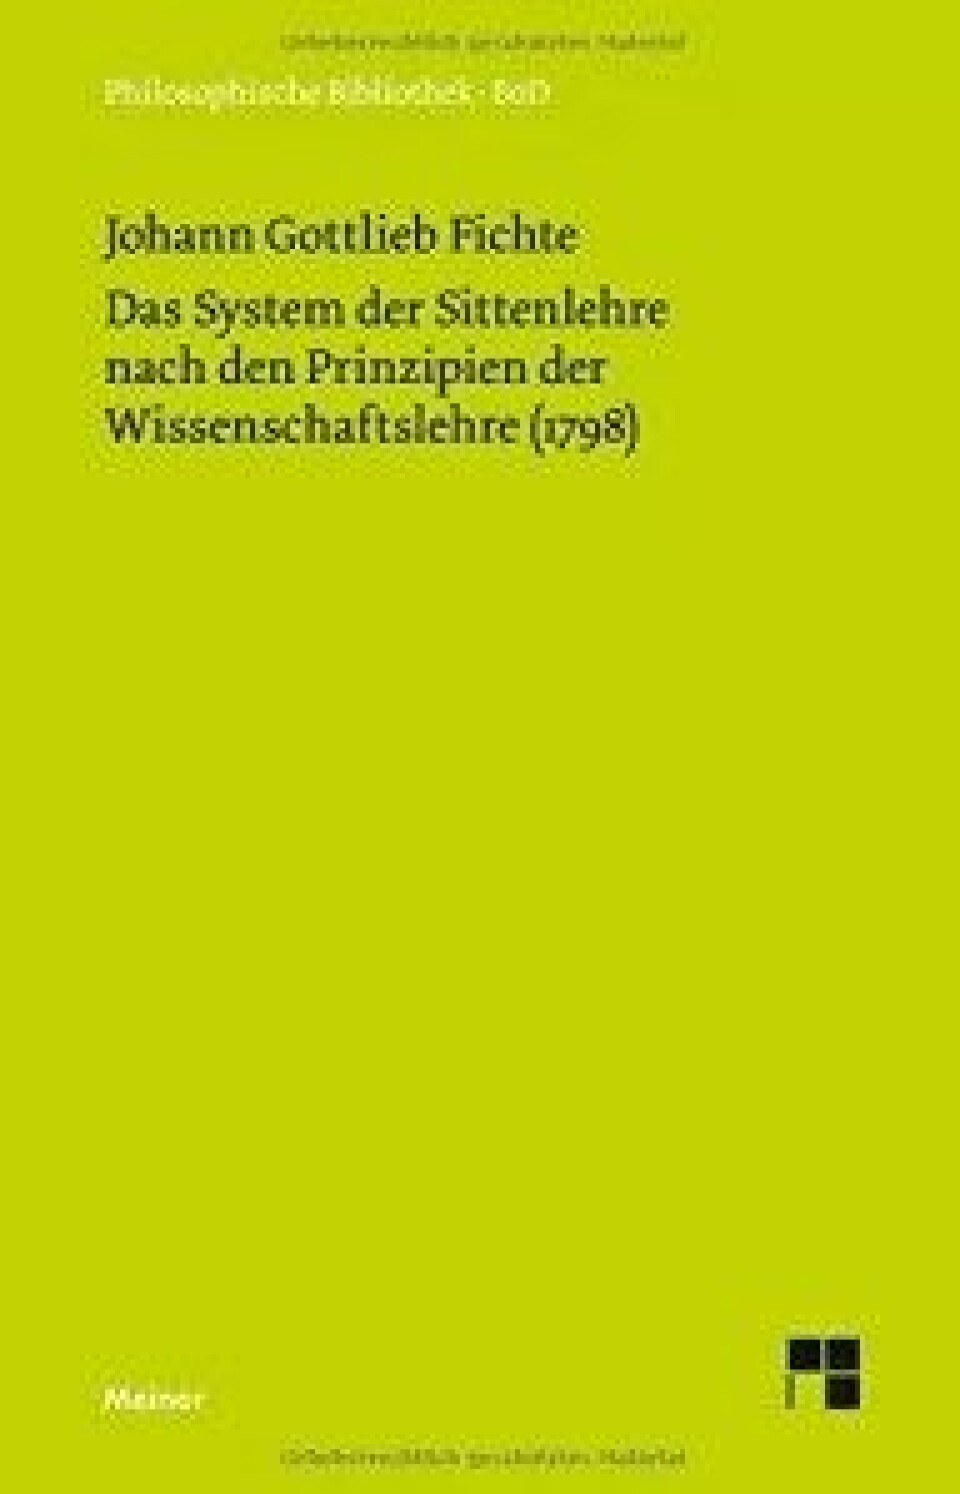 Fichtes System der Sittenlehre. Ein Kooperativer Kommentar av Jean-Christophe Merle og Andreas Schmidt (red.)